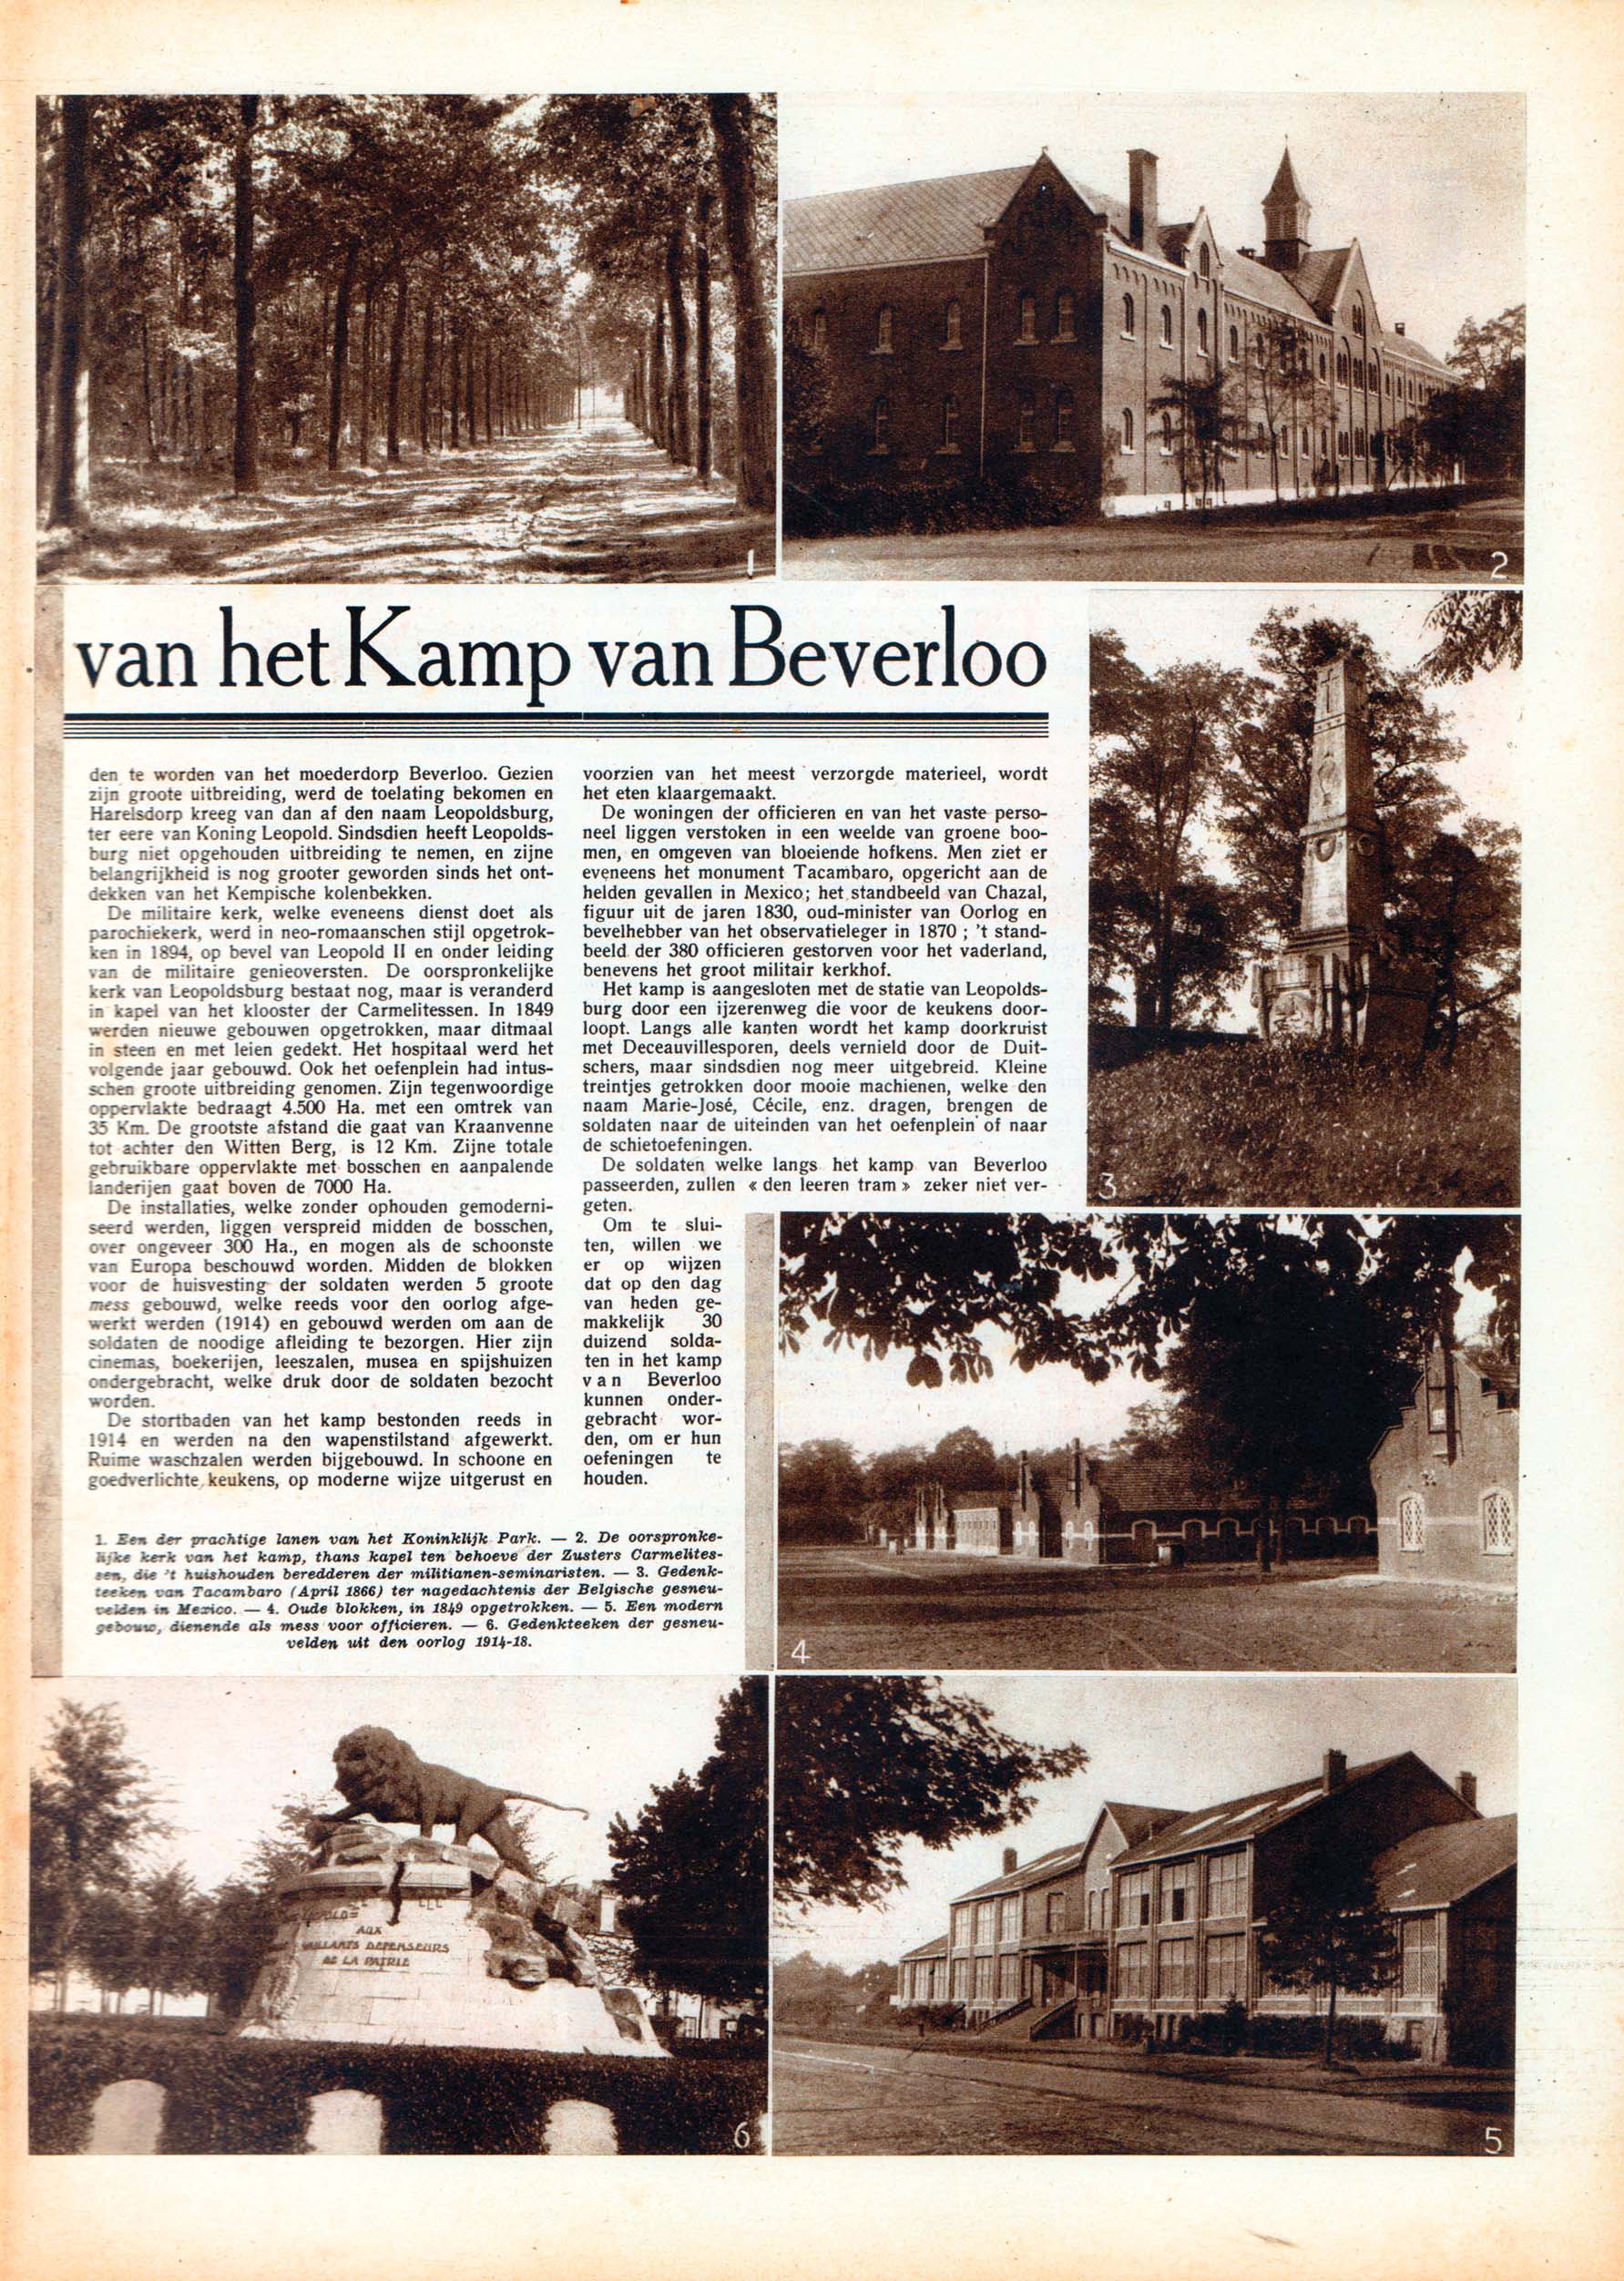 Leopoldsburg Camp of Beverloo